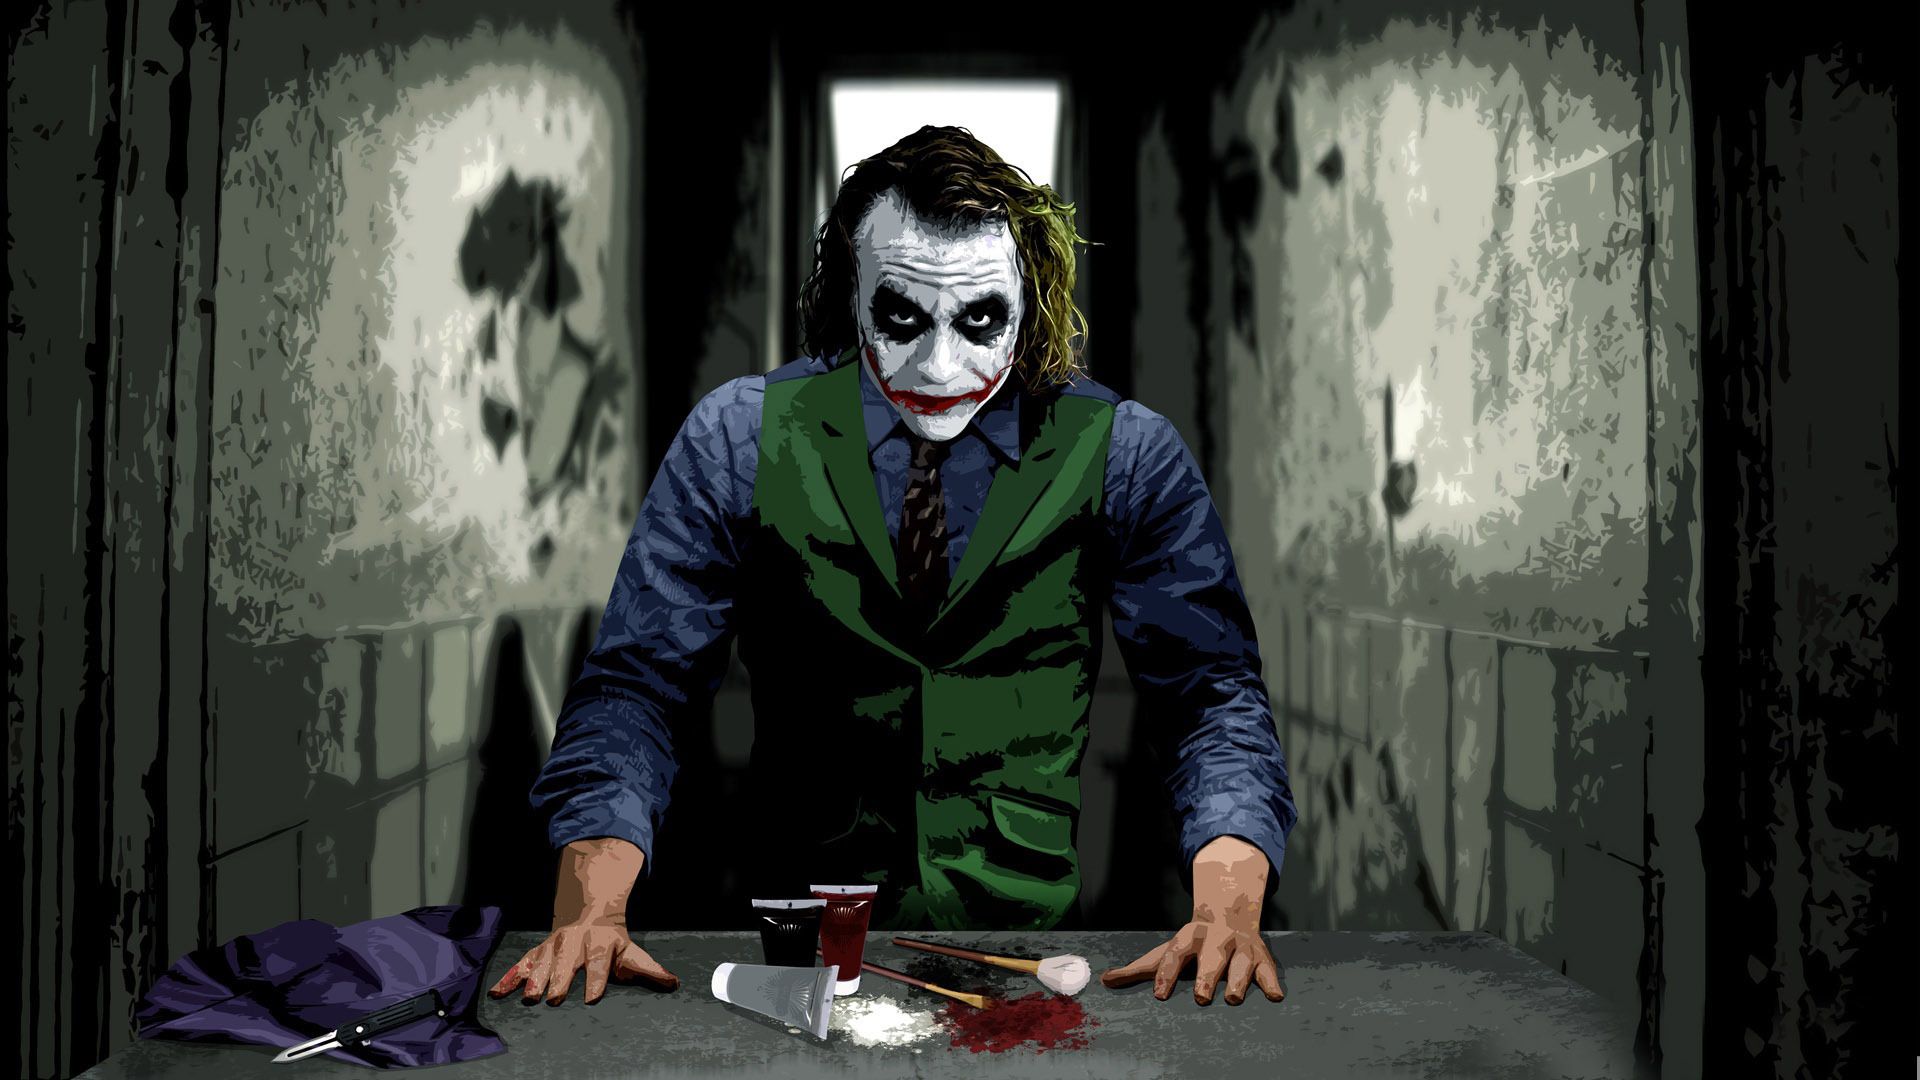 Download 1920x1080 Joker -Batman wallpaper